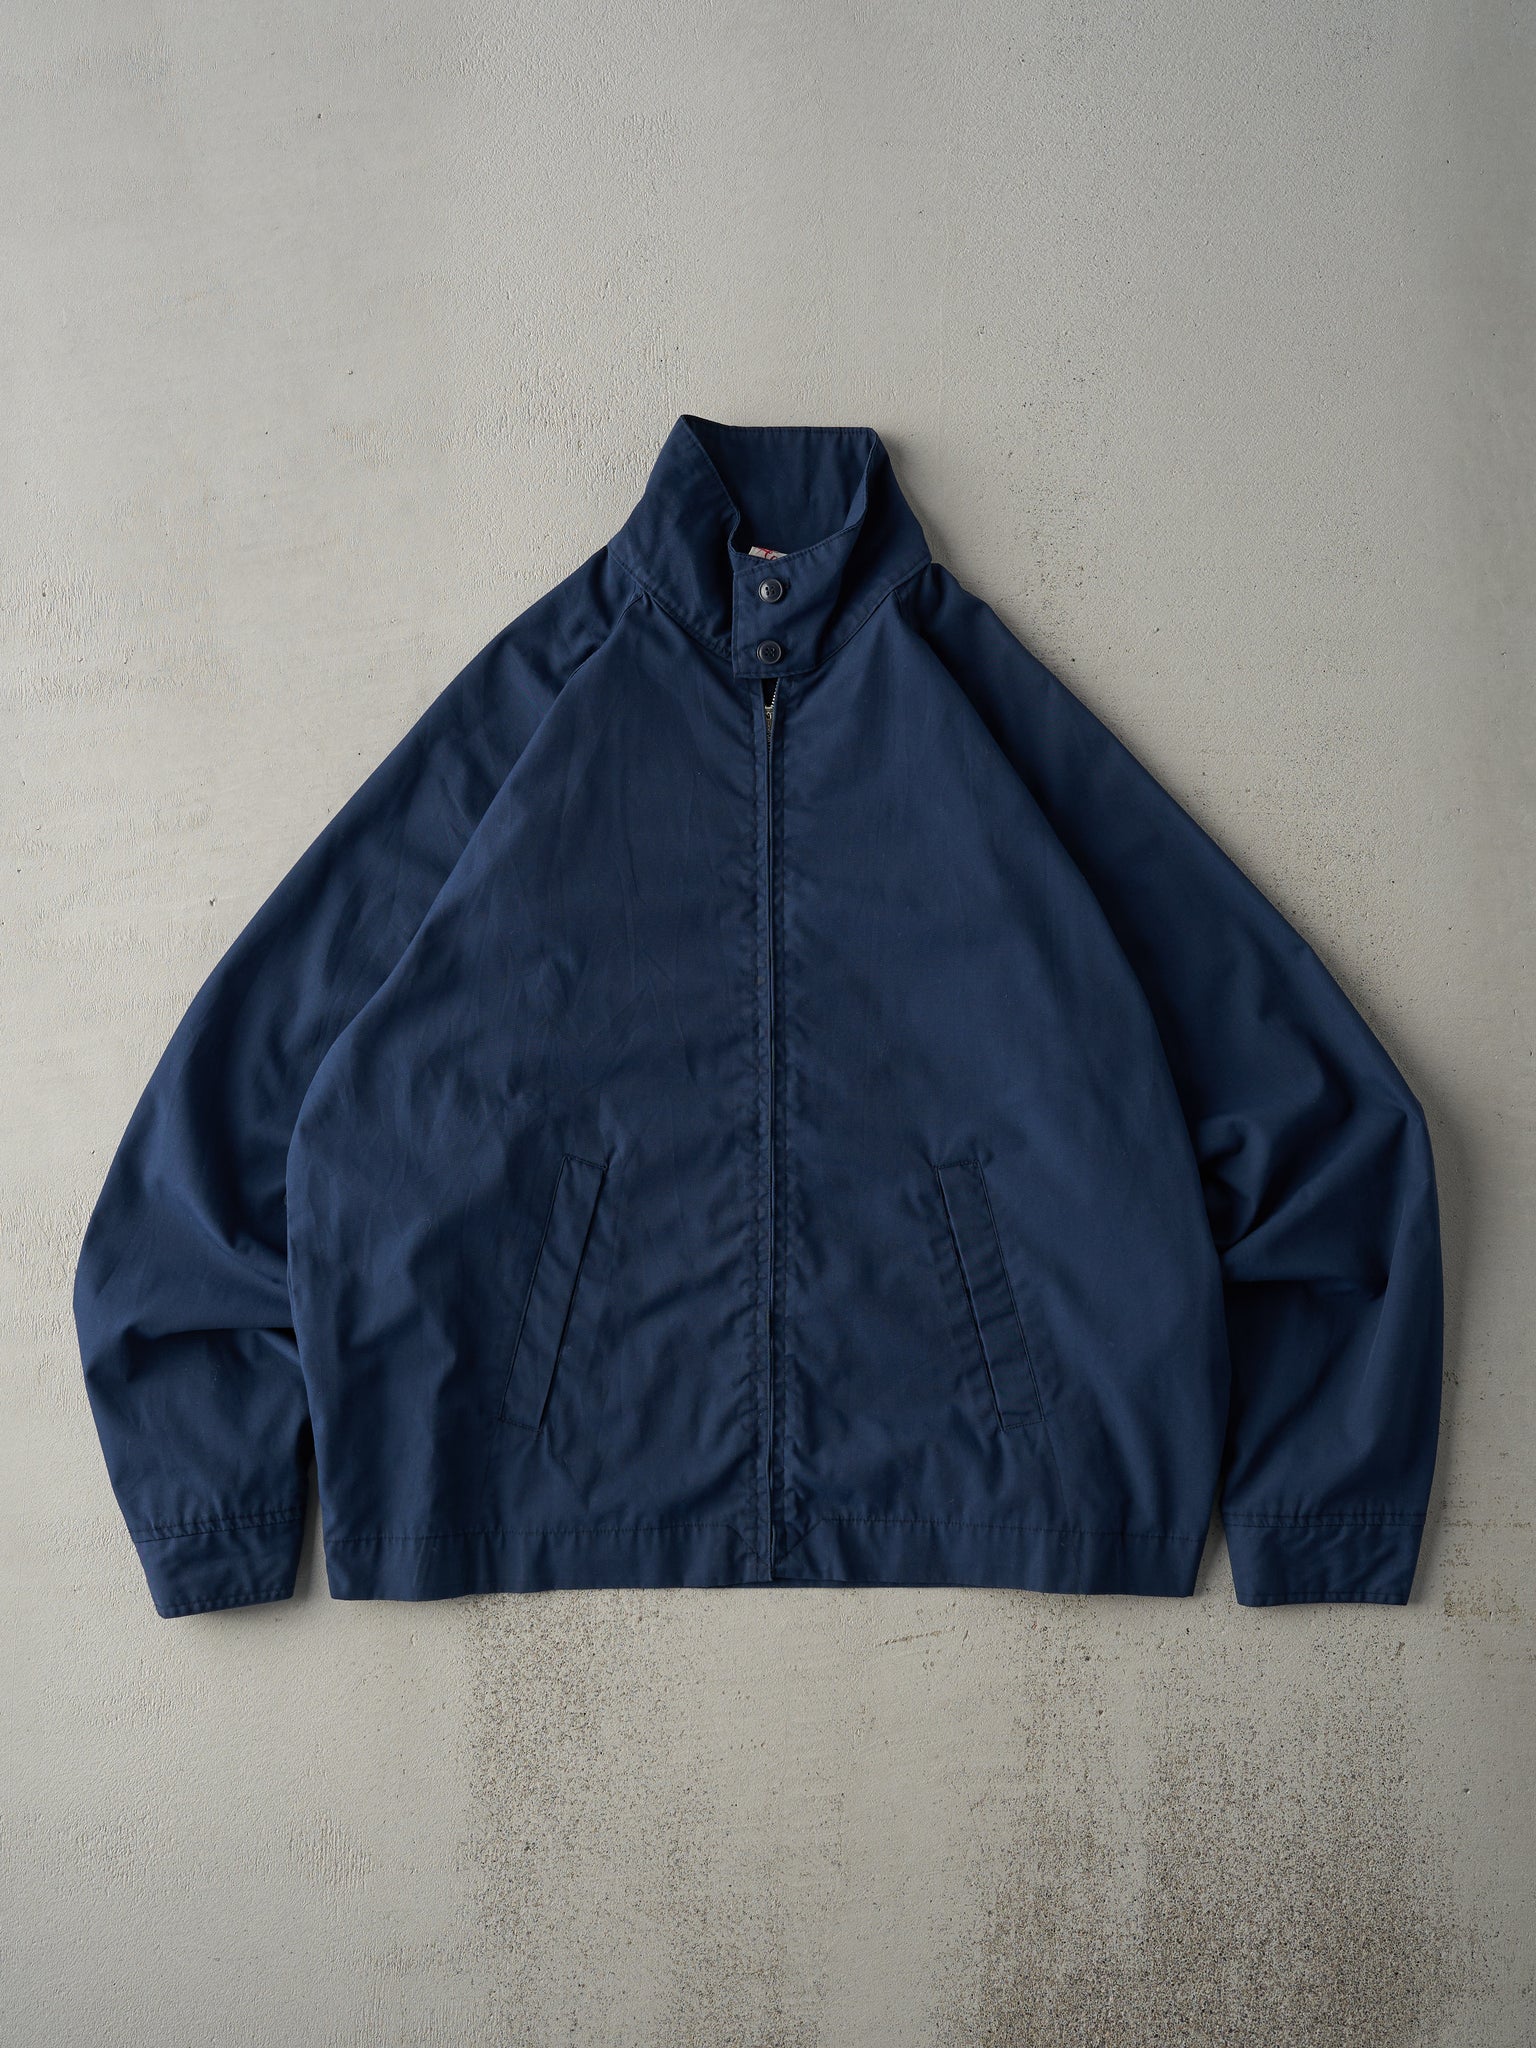 Vintage 80s Navy Blue Harrington Jacket (M)